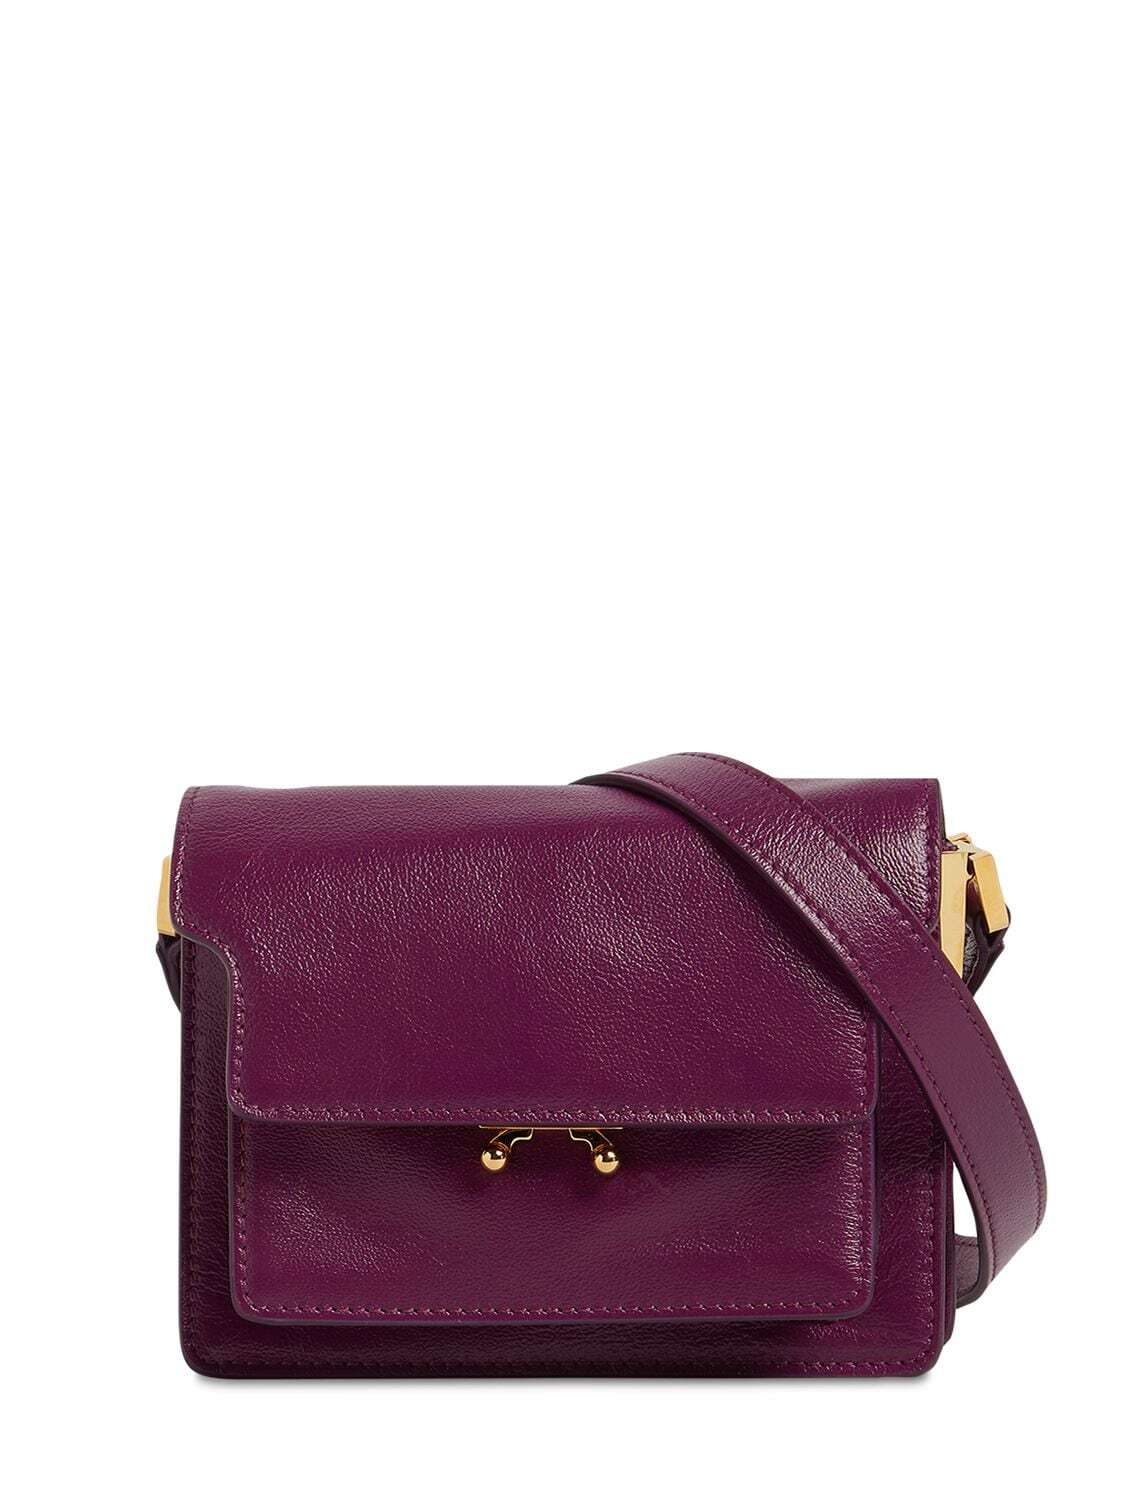 MARNI Mini Trunk Soft Leather Shoulder Bag in plum